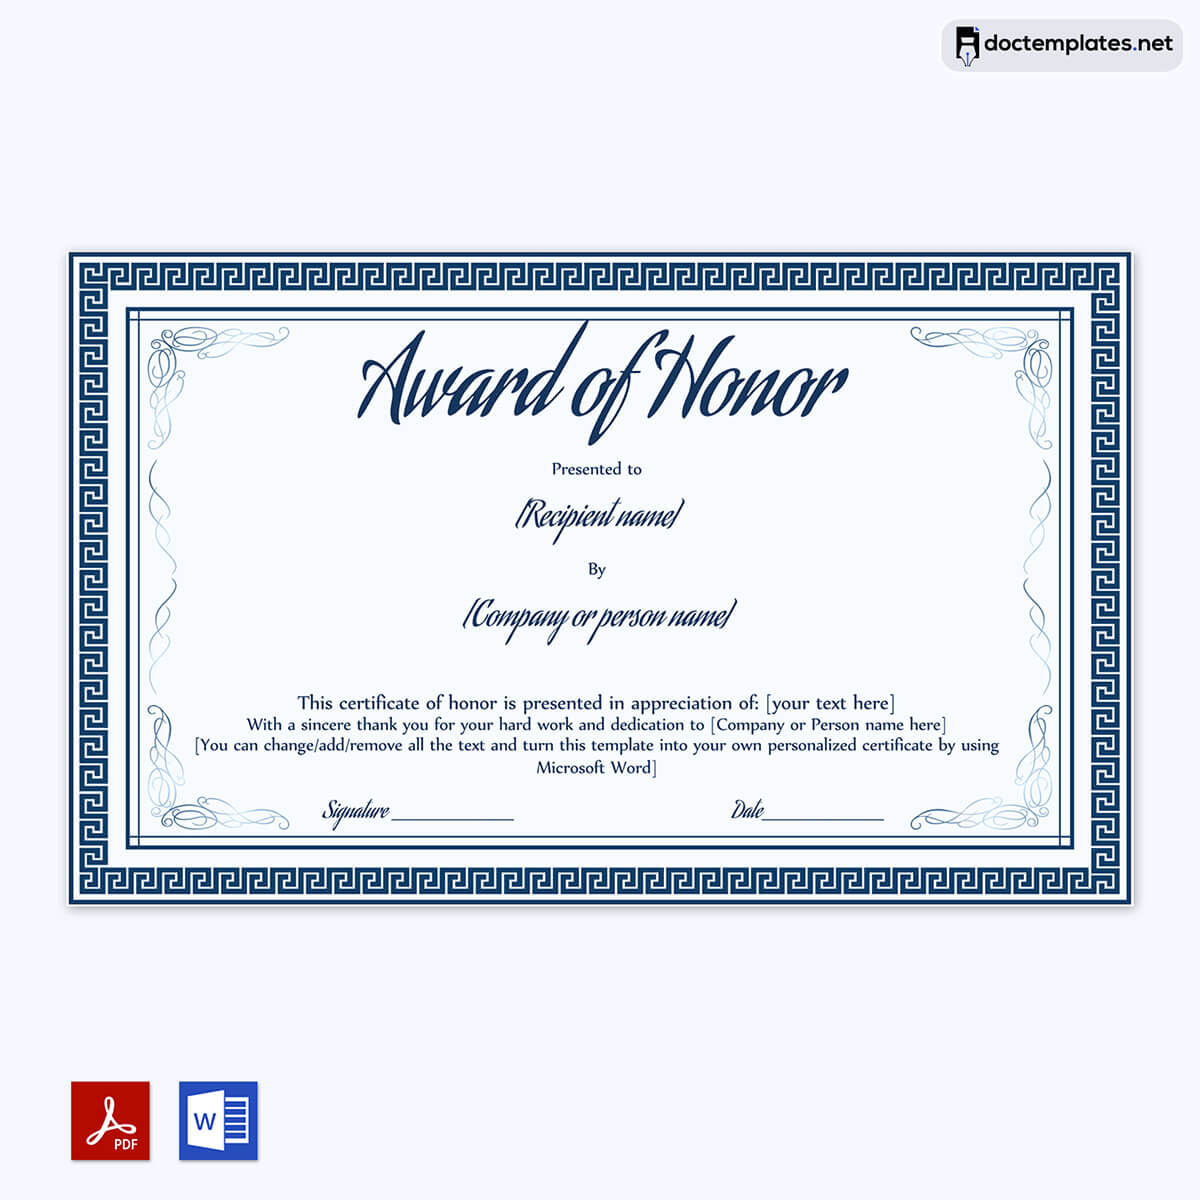 Image of Award Certificate PDF
Award Certificate PDF
